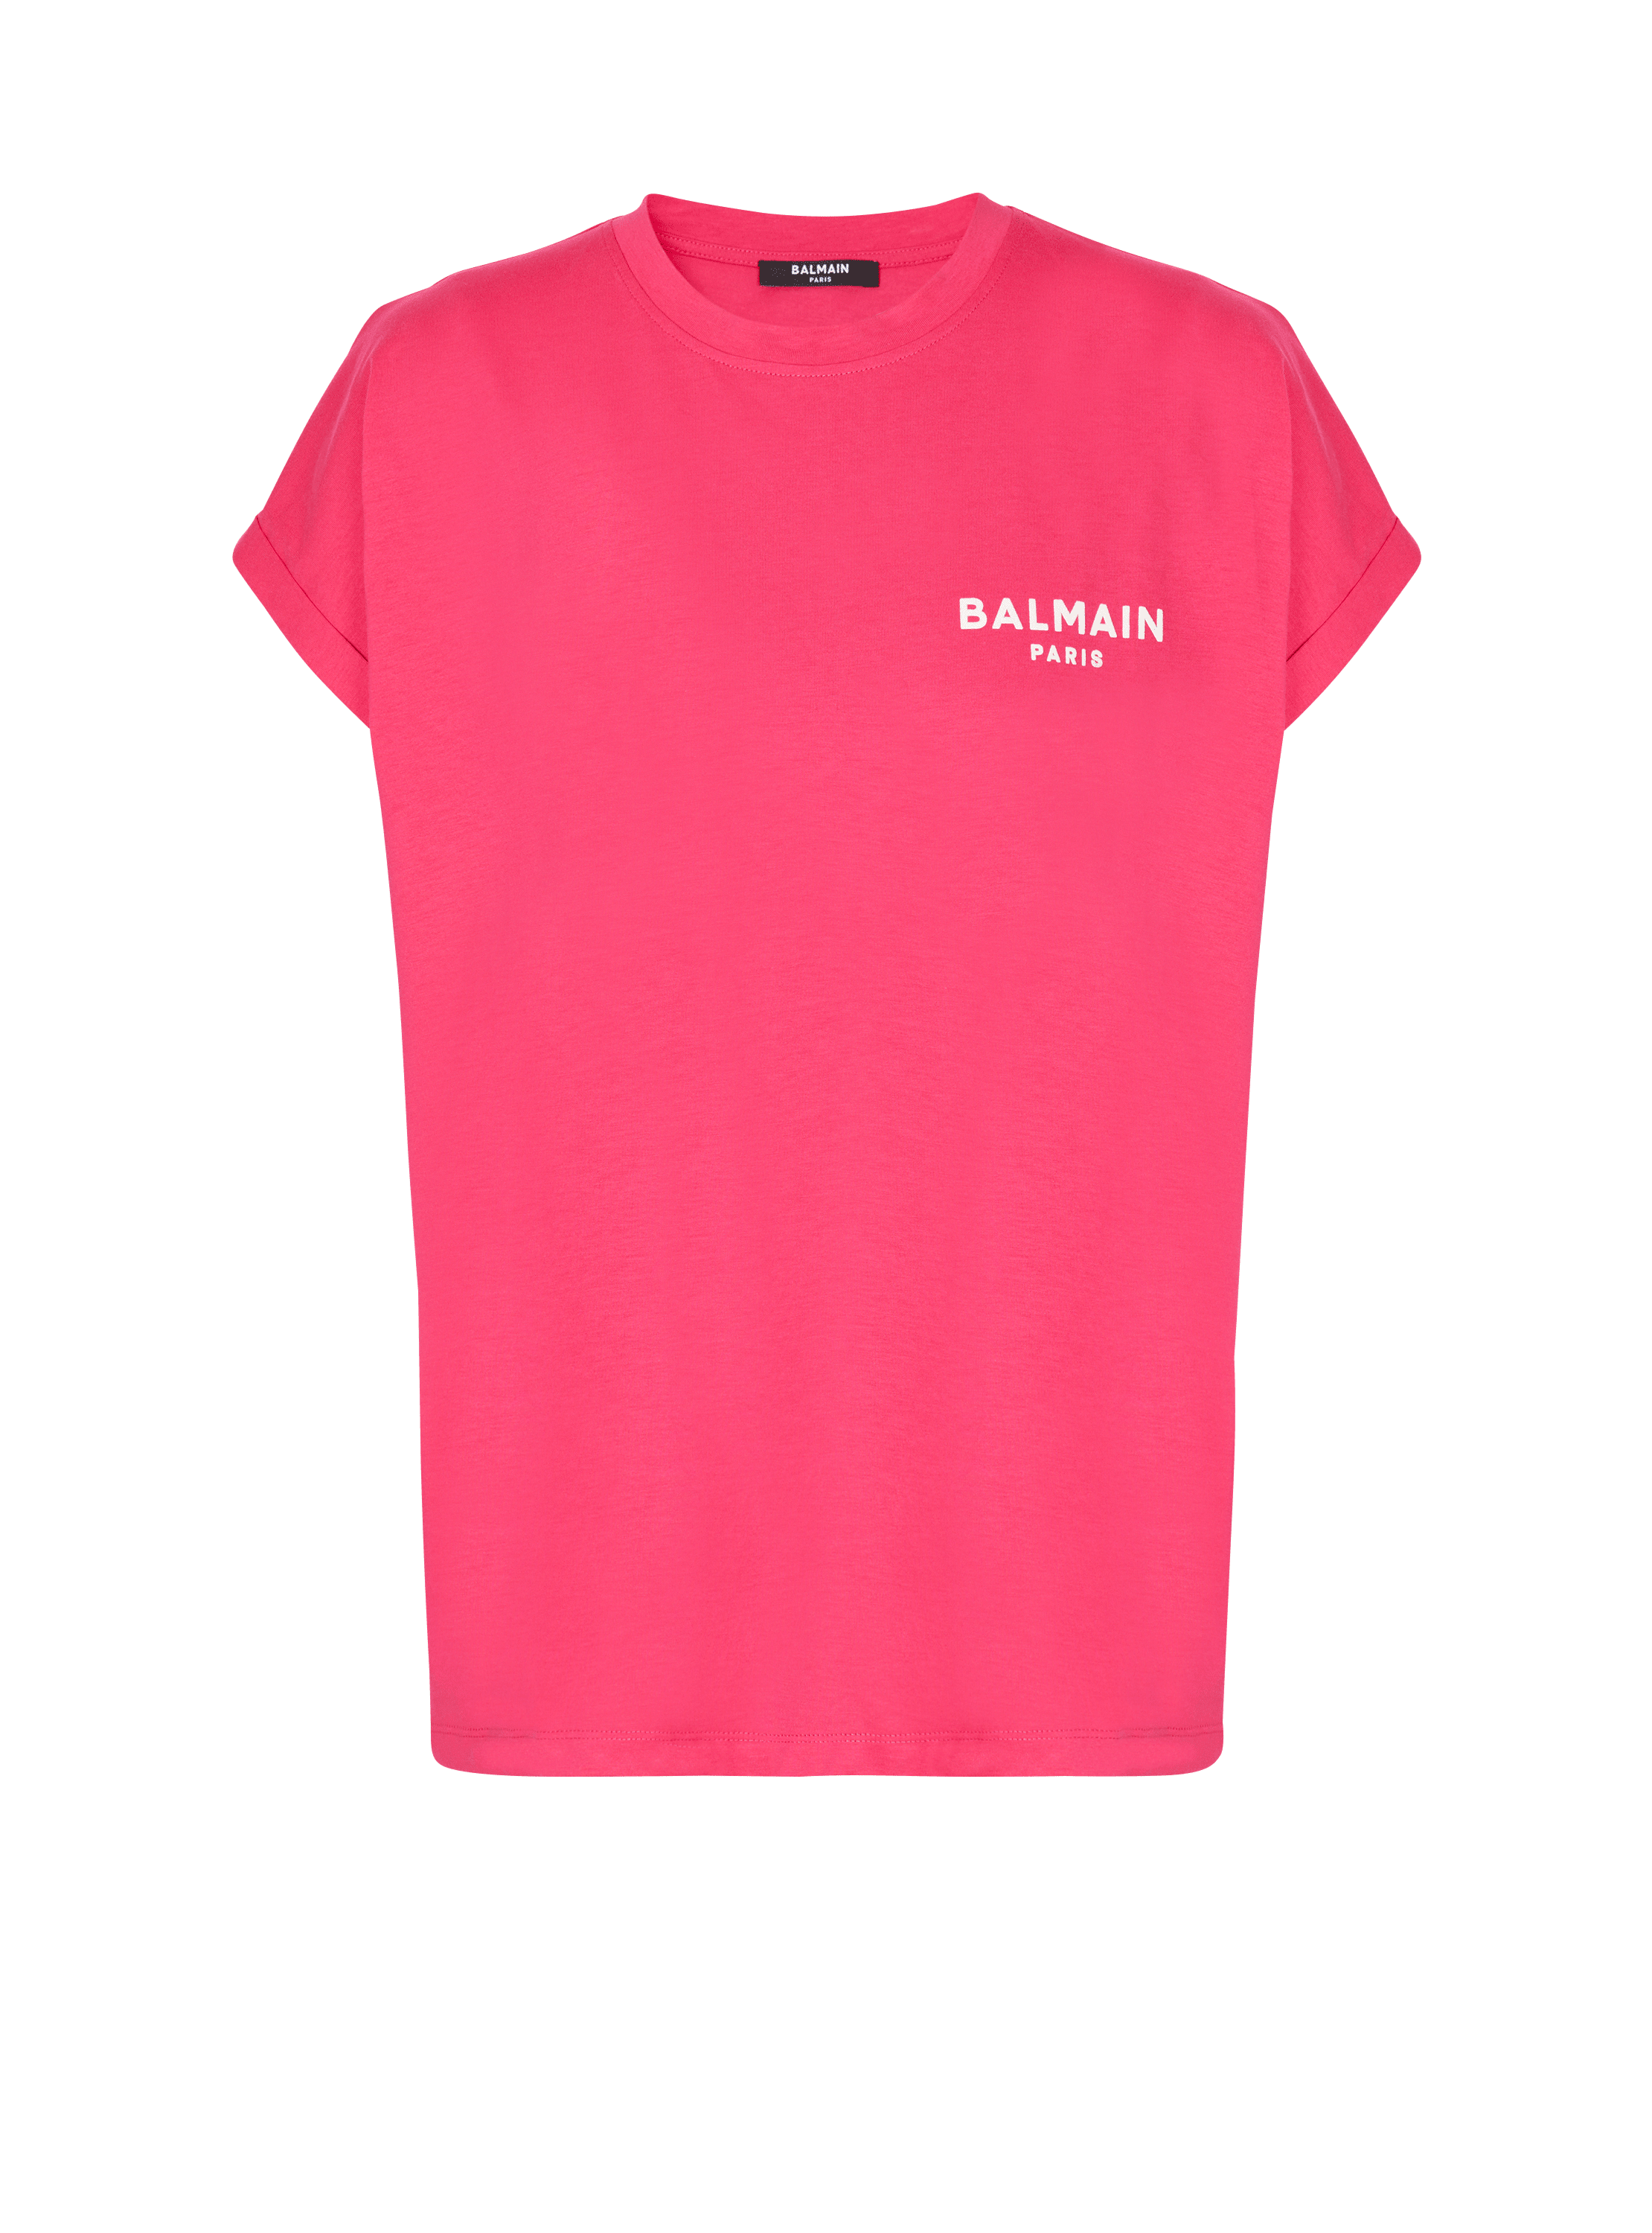 Flocked Balmain T-shirt, pink, hi-res